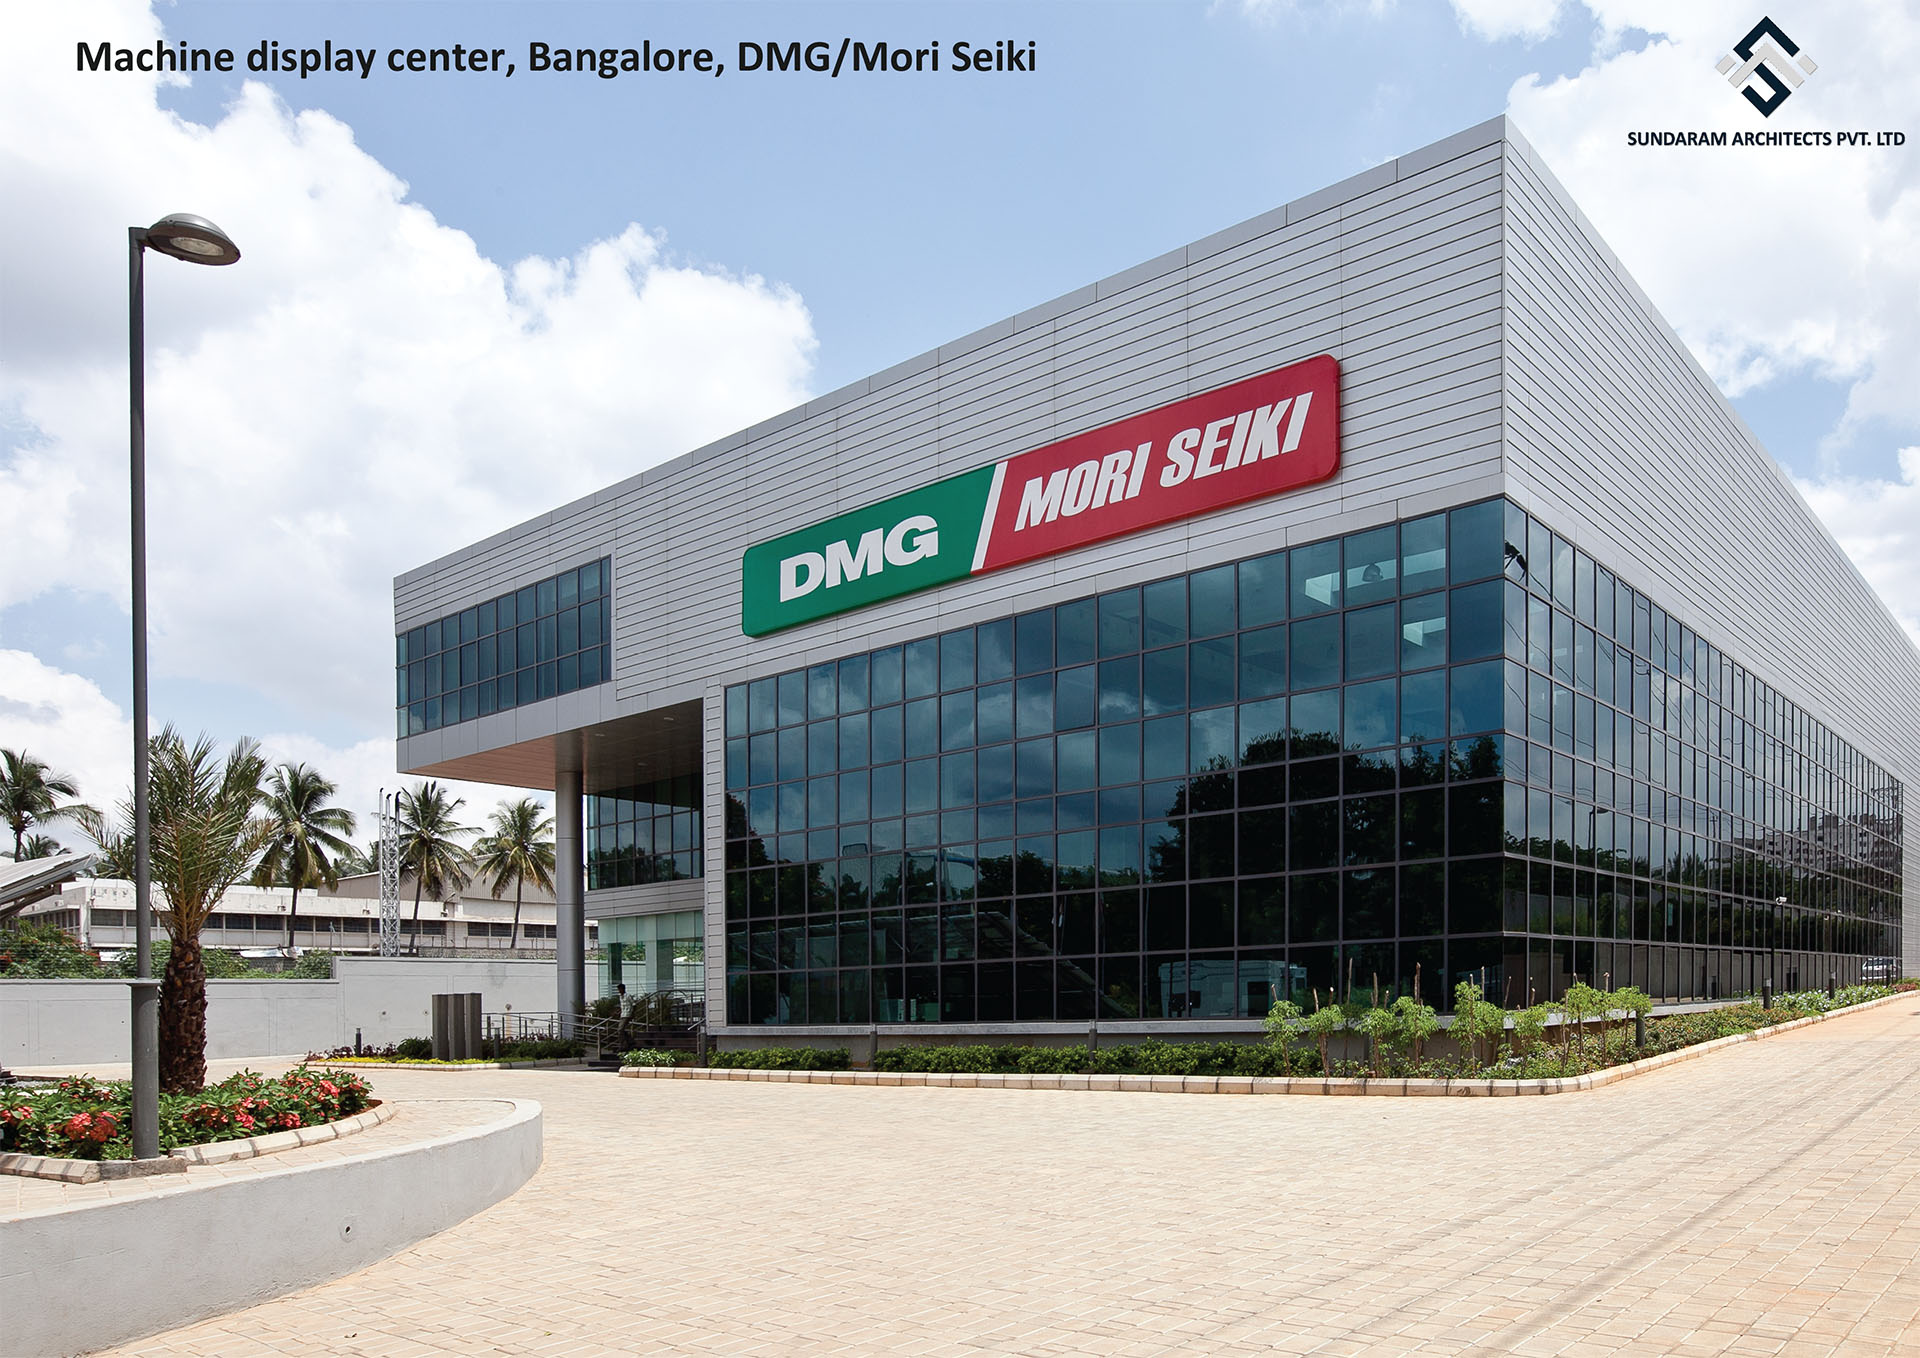 Machine Display Center, Bangalore, DMG/Mori Seiki - Industrial & Manufacturing Design